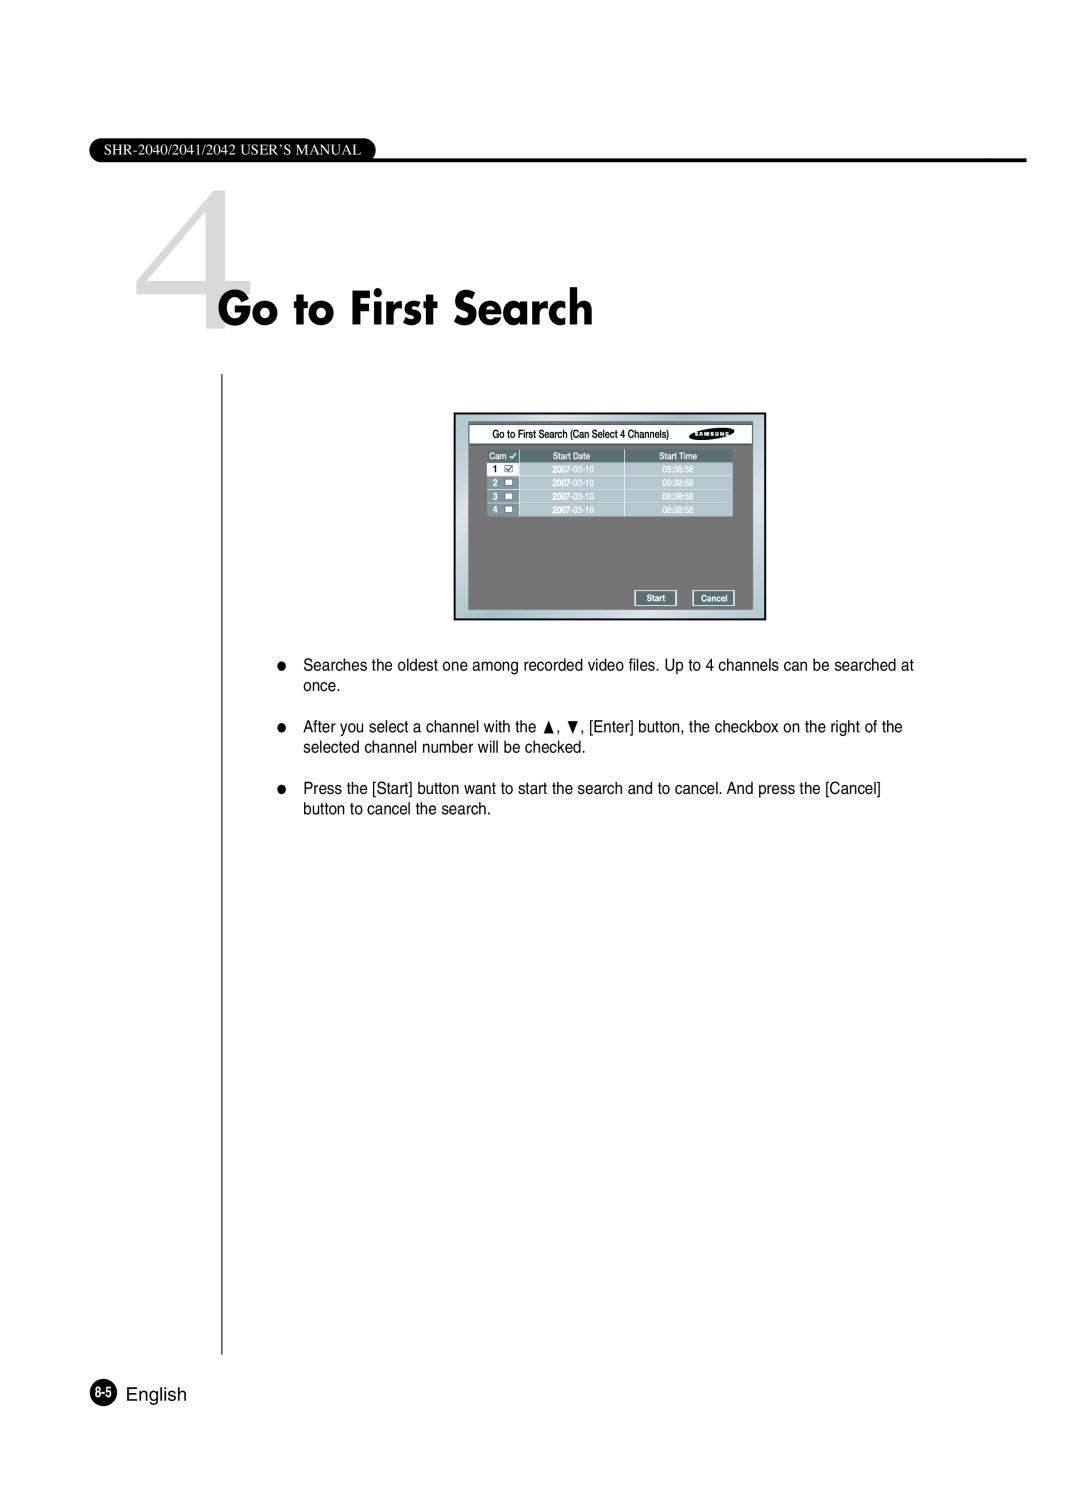 Samsung SHR-2042P250, SHR-2040P250 manual 4Go to First Search, English 